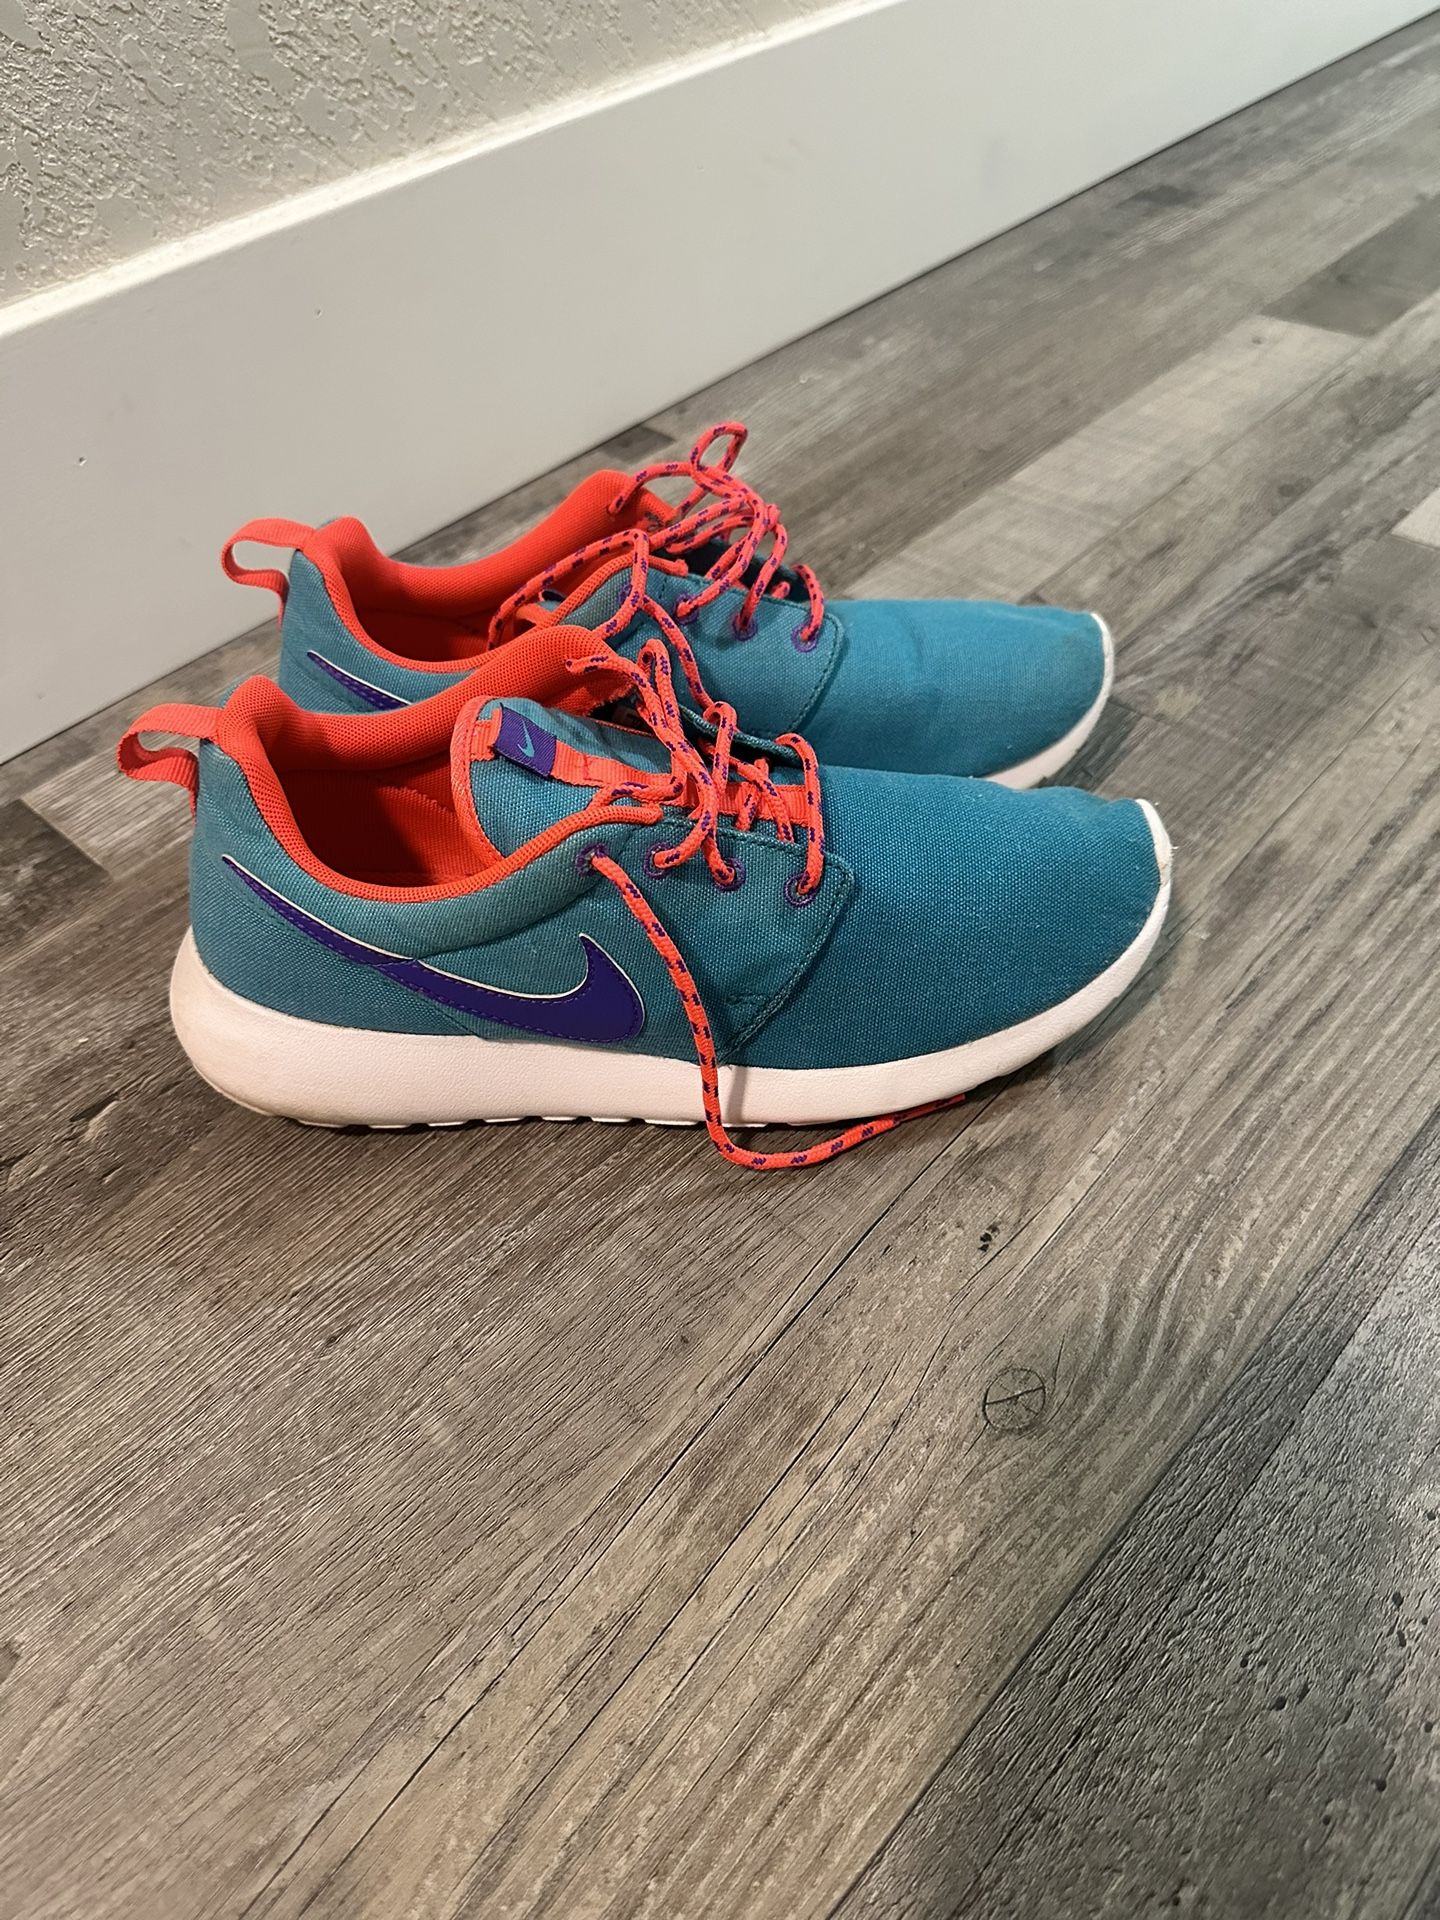 Nike Running Shoe  Size 7